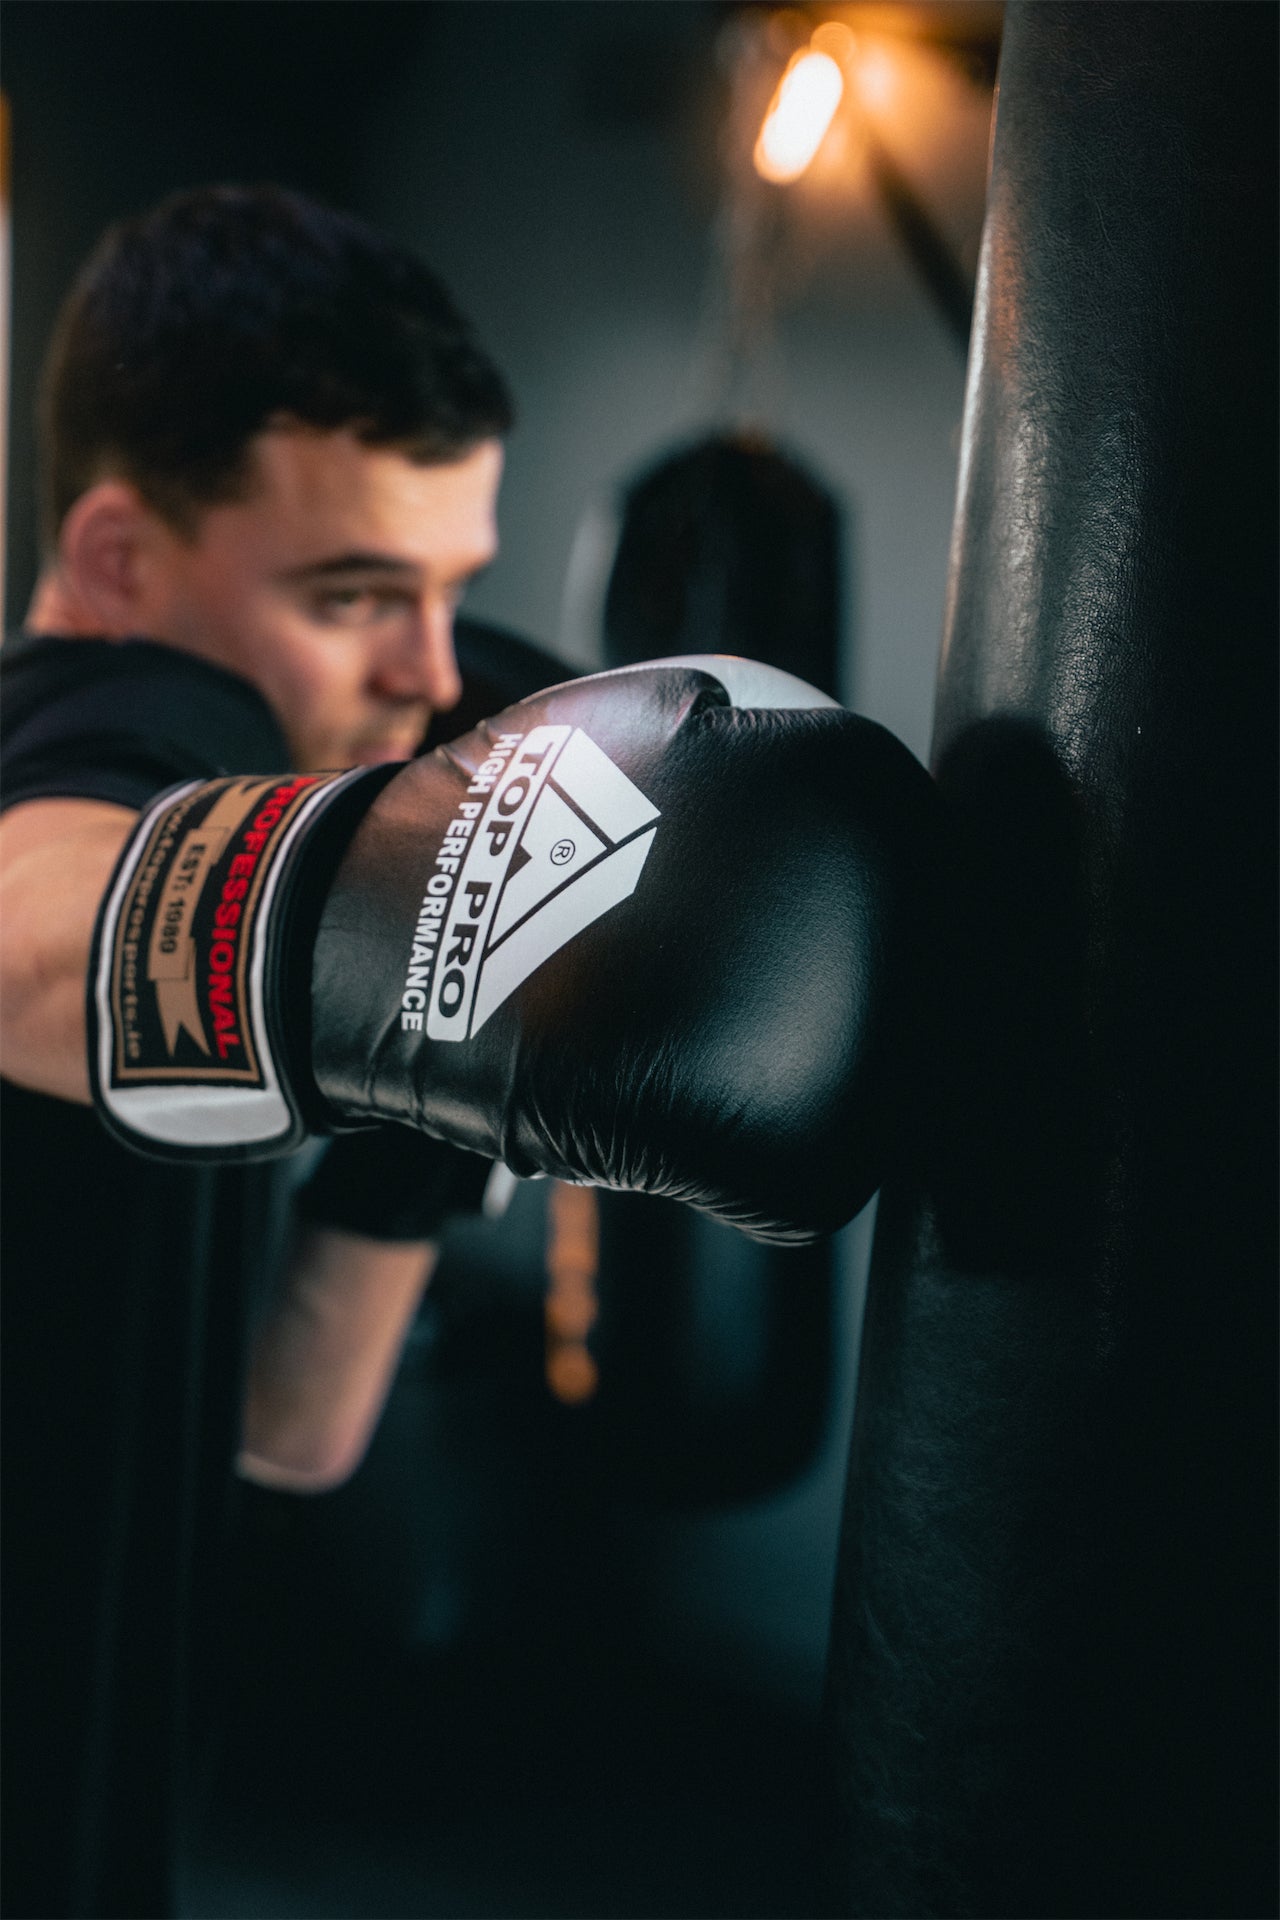 High Performance Boxing Glove